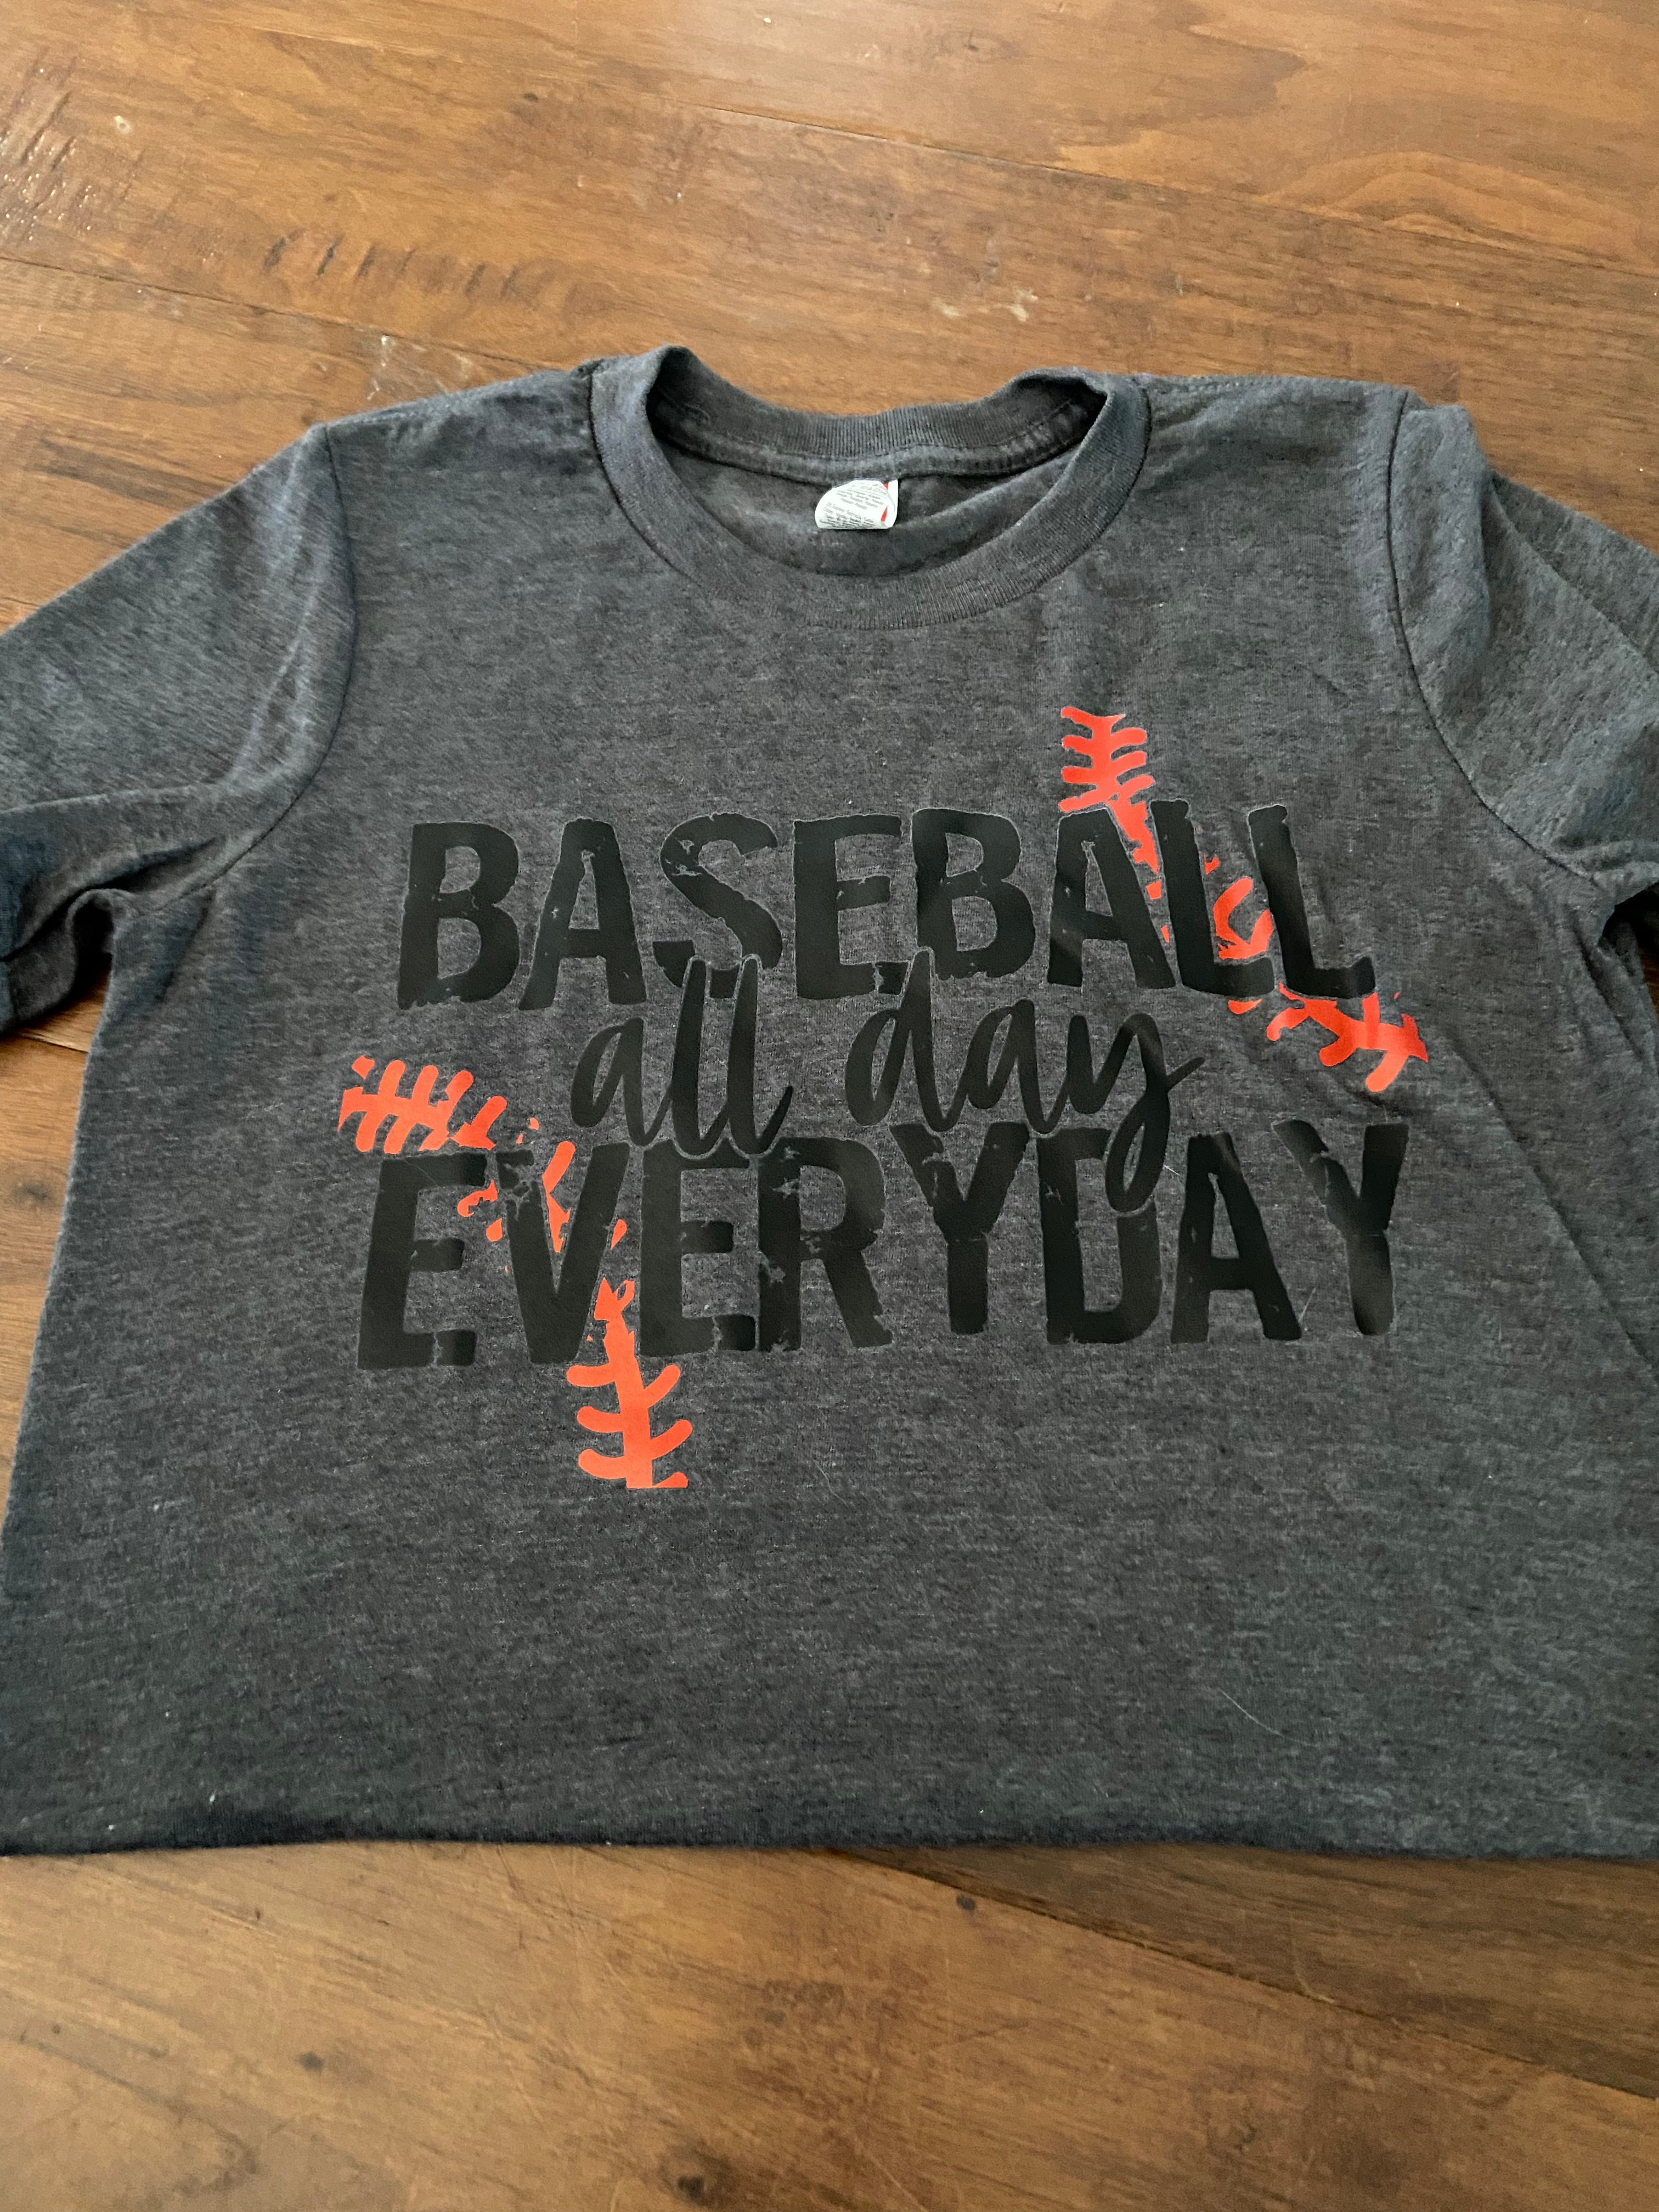 Baseball All Day Everyday- Crewneck Unisex Adult T-Shirt